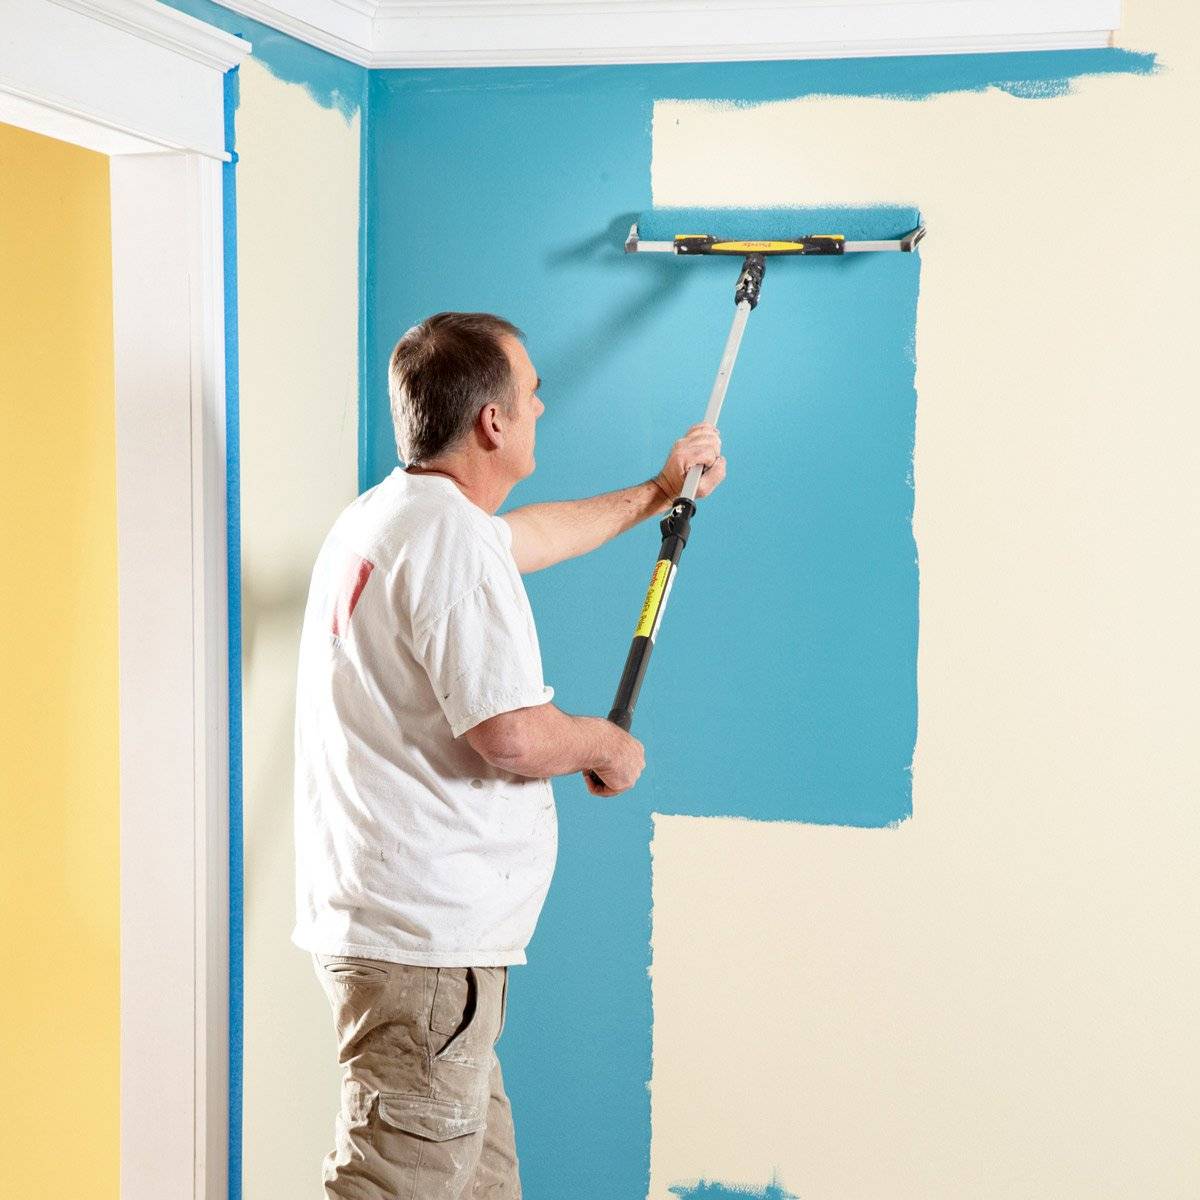 Покраска стен. Окрашивание стен. Покрашенные стены. Краска для стен в квартире. Этапы стен под покраску